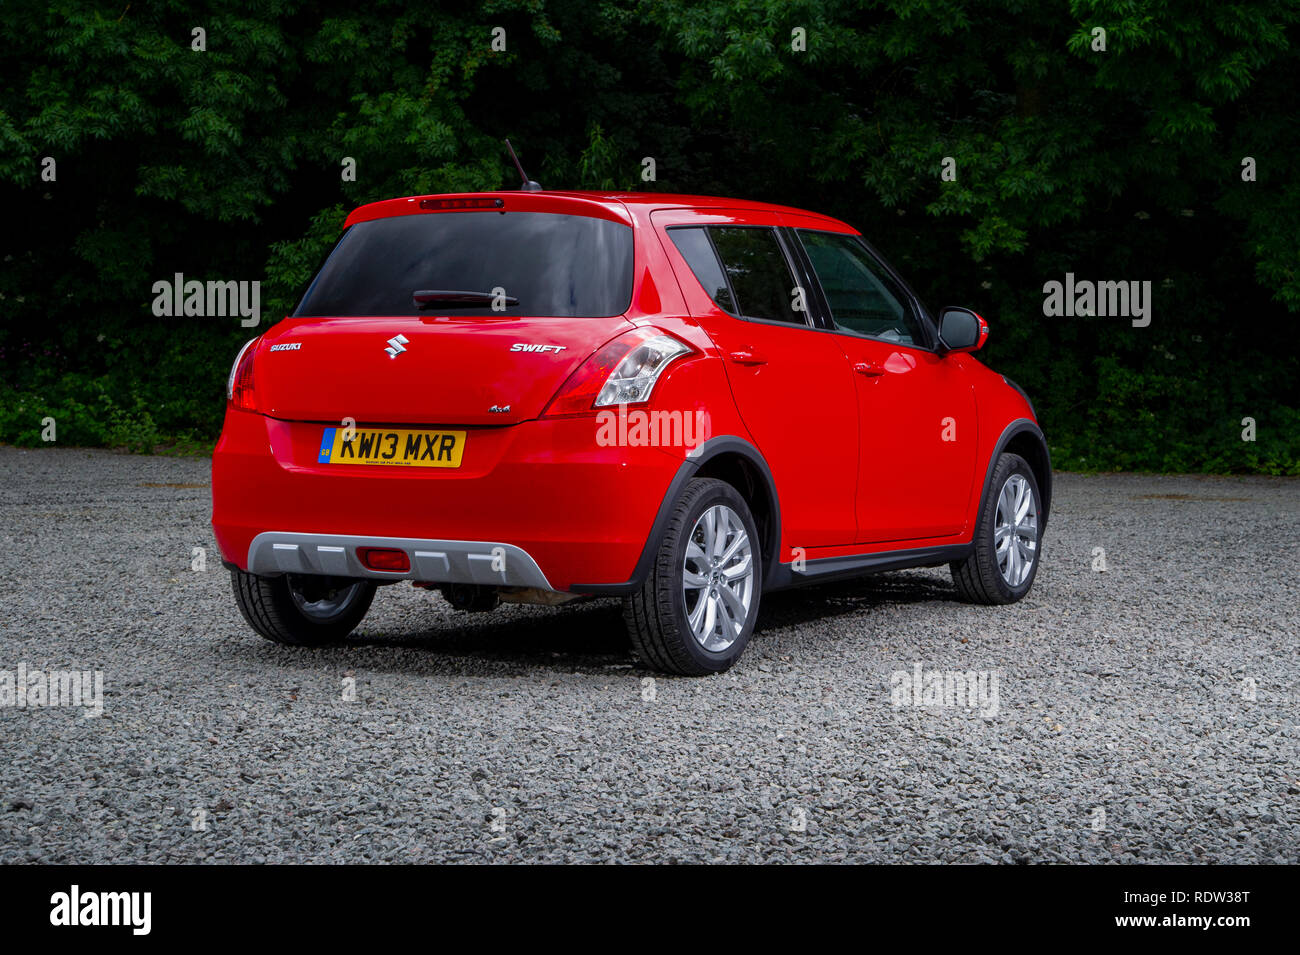 2013 Suzuki Swift 4x4 - 4 wheel drive compact car Stock Photo - Alamy